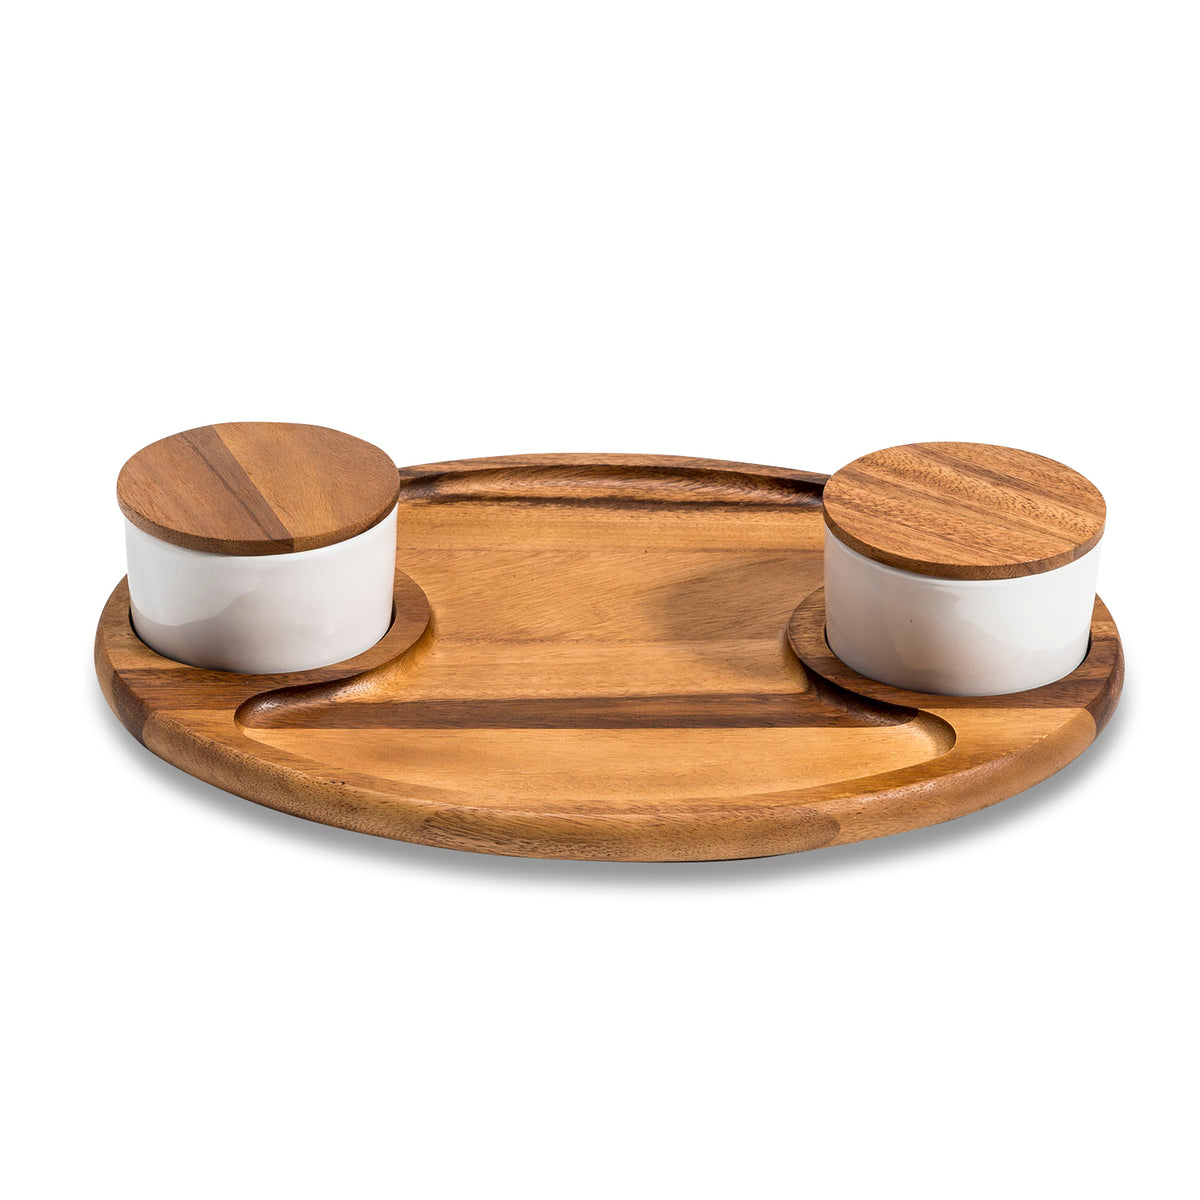 Charcuterie/ Serving Tray w/ 2 ceramic bowls w/ lids